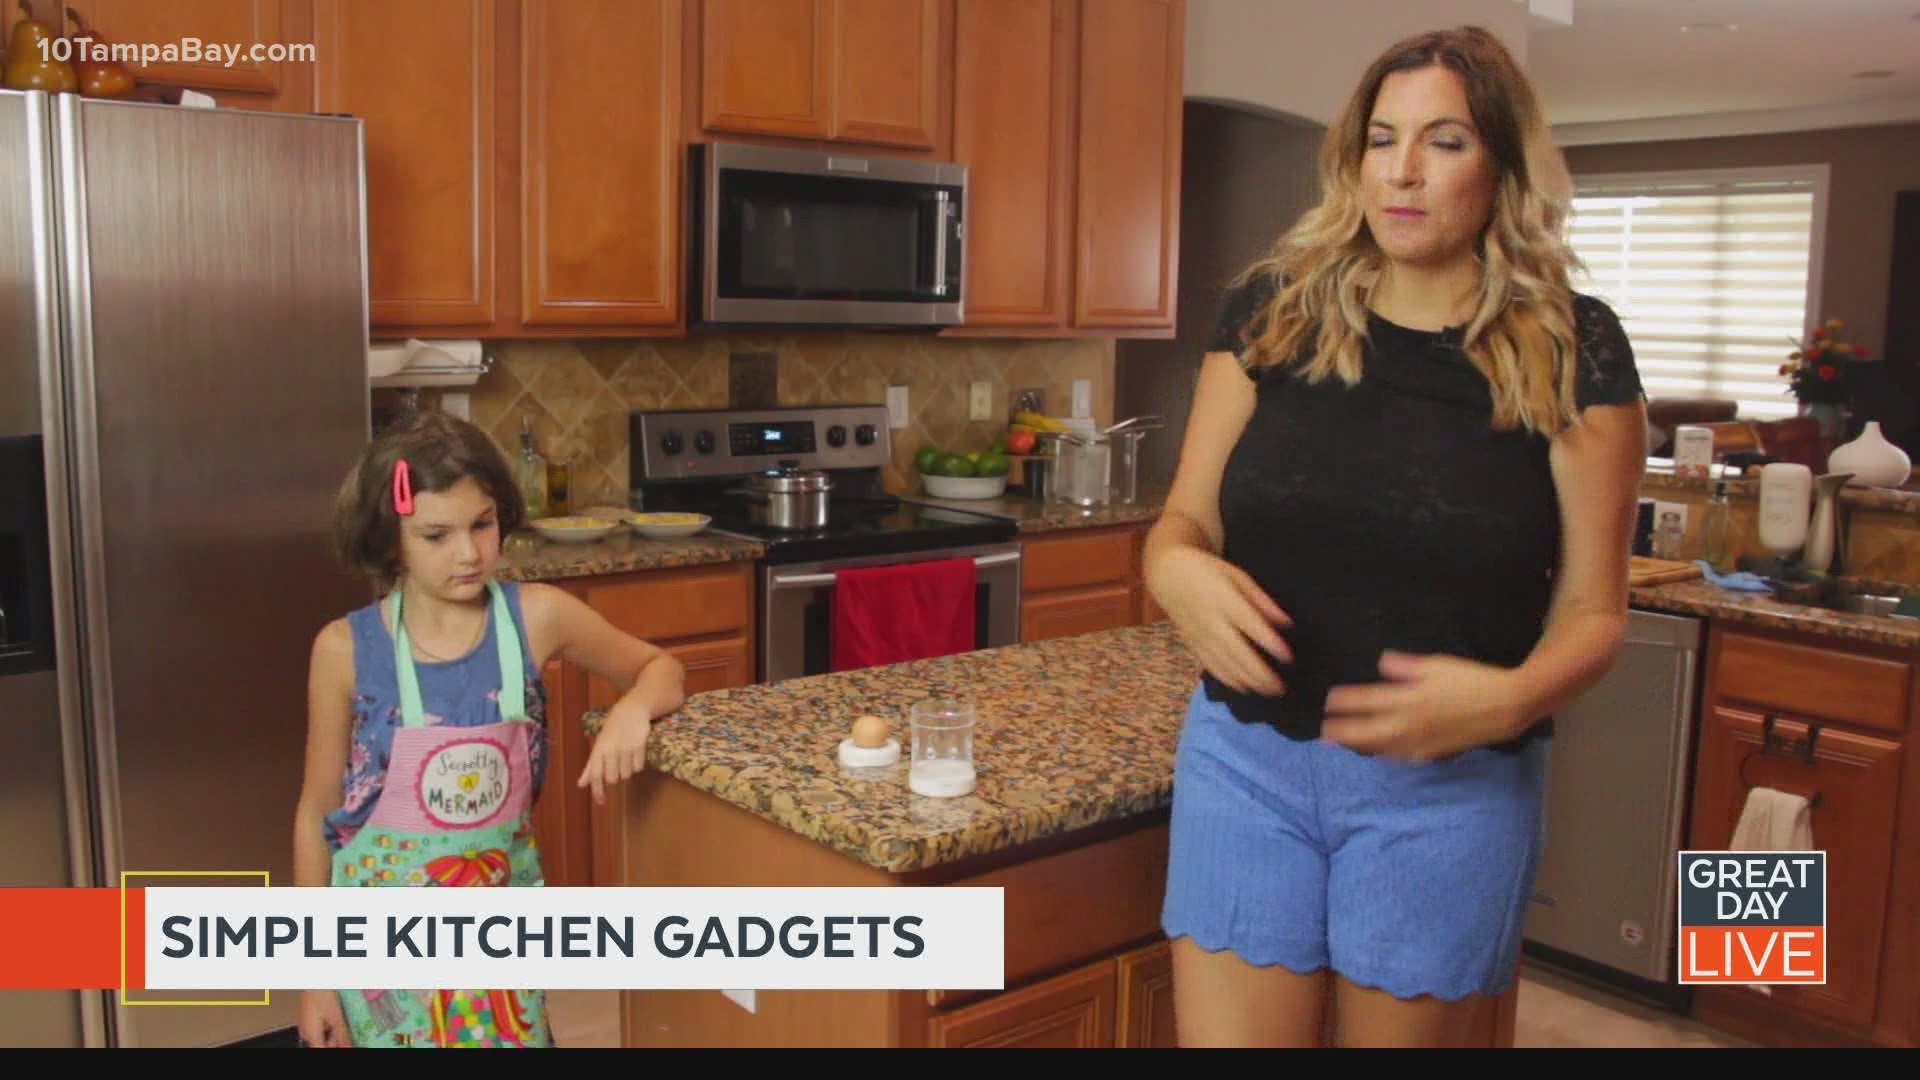 Must-have kitchen gadgets